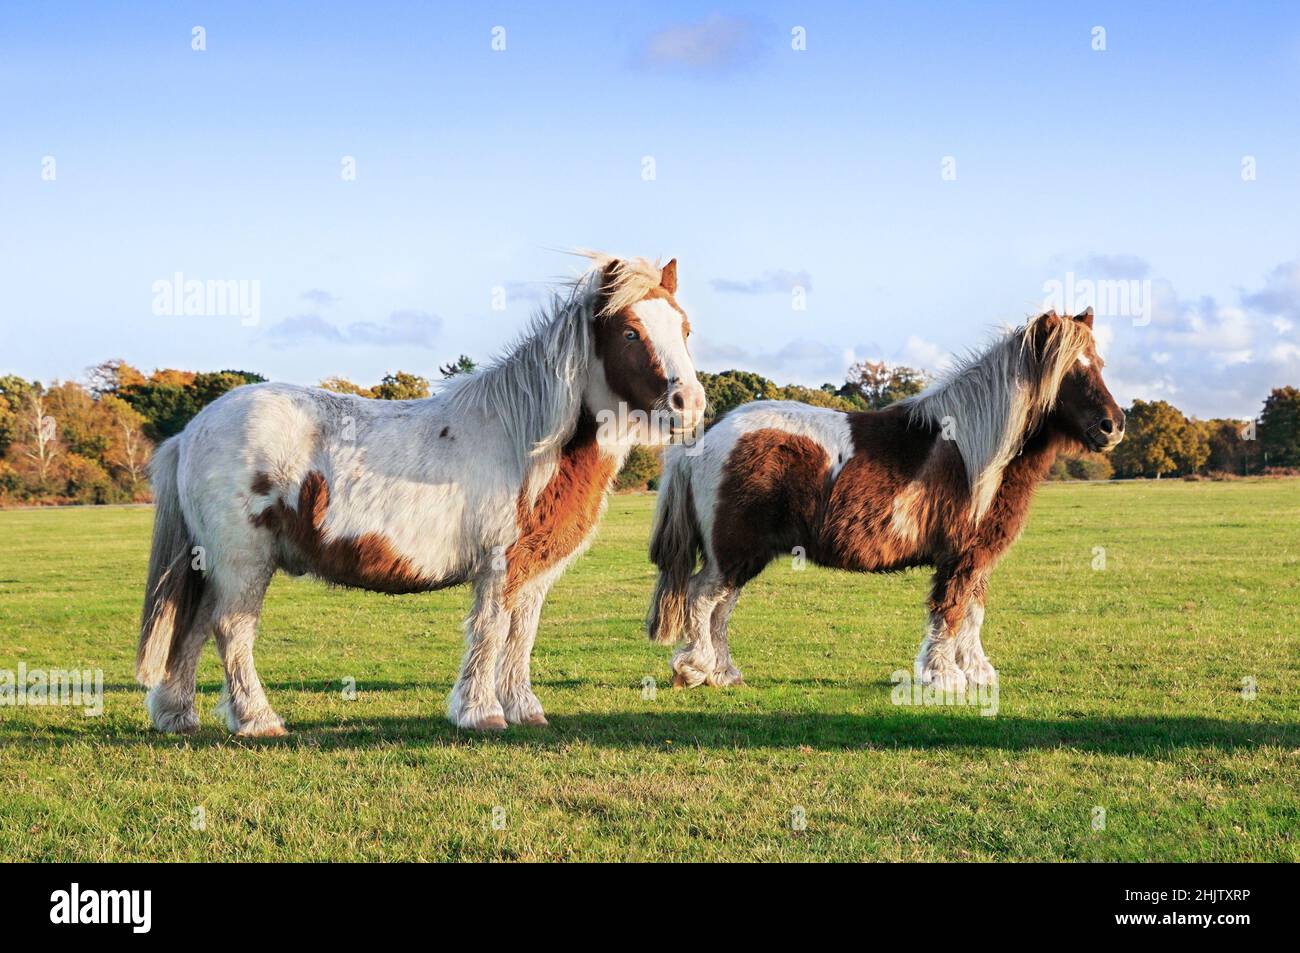 Two New Forest ponies together on open grassland in sunshine, Brockenhurst, New Forest National Park, Hampshire, England, UK Stock Photo